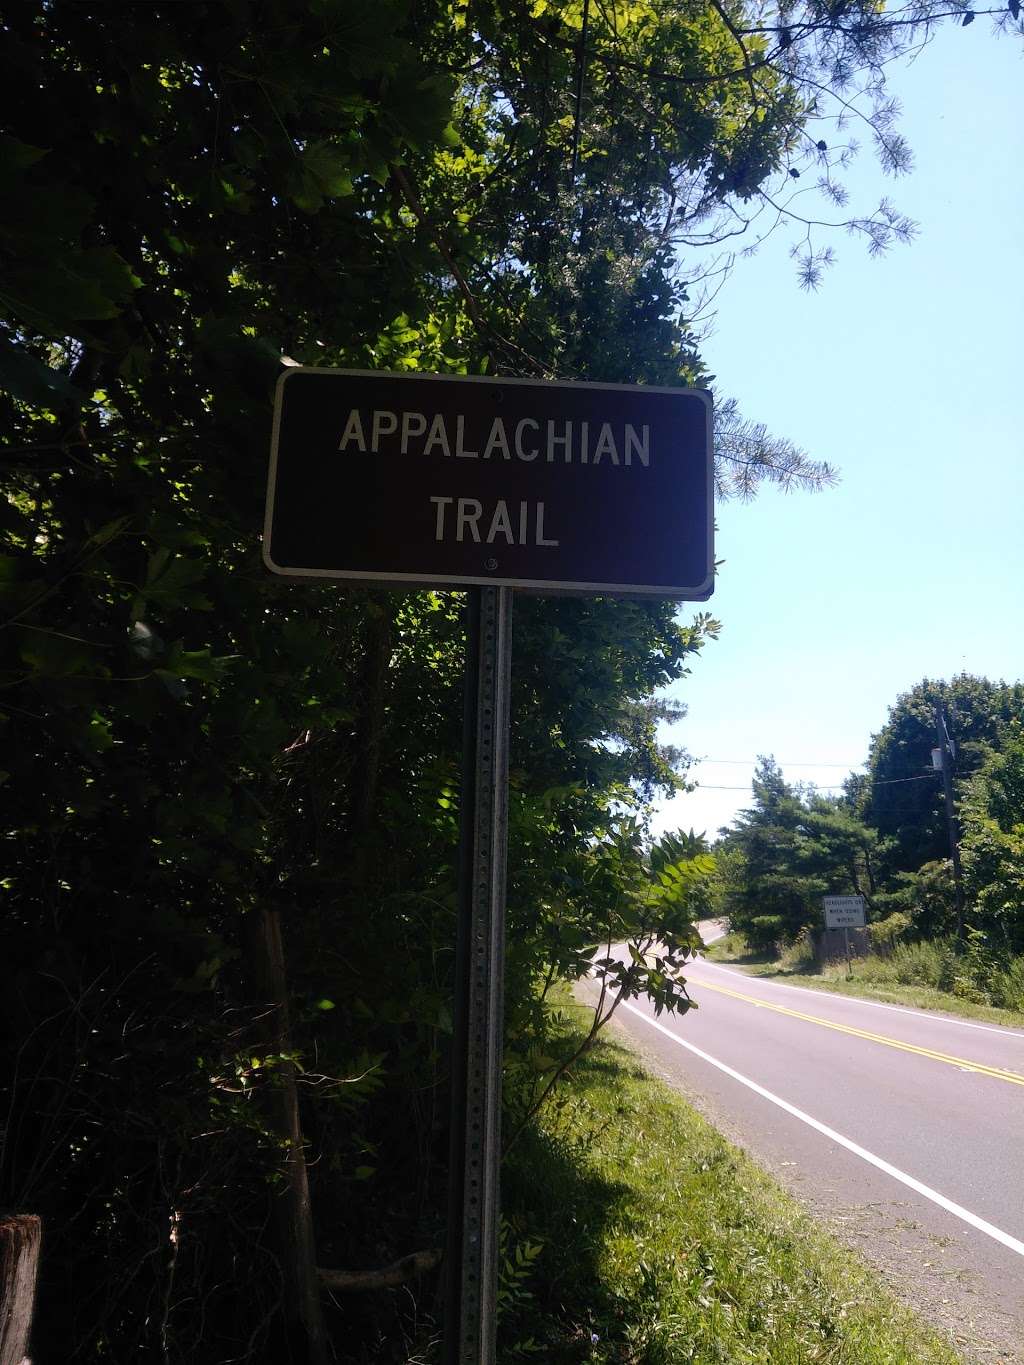 Keys Gap Parking Area | Appalachian Trail, Purcellville, WV 20132, USA